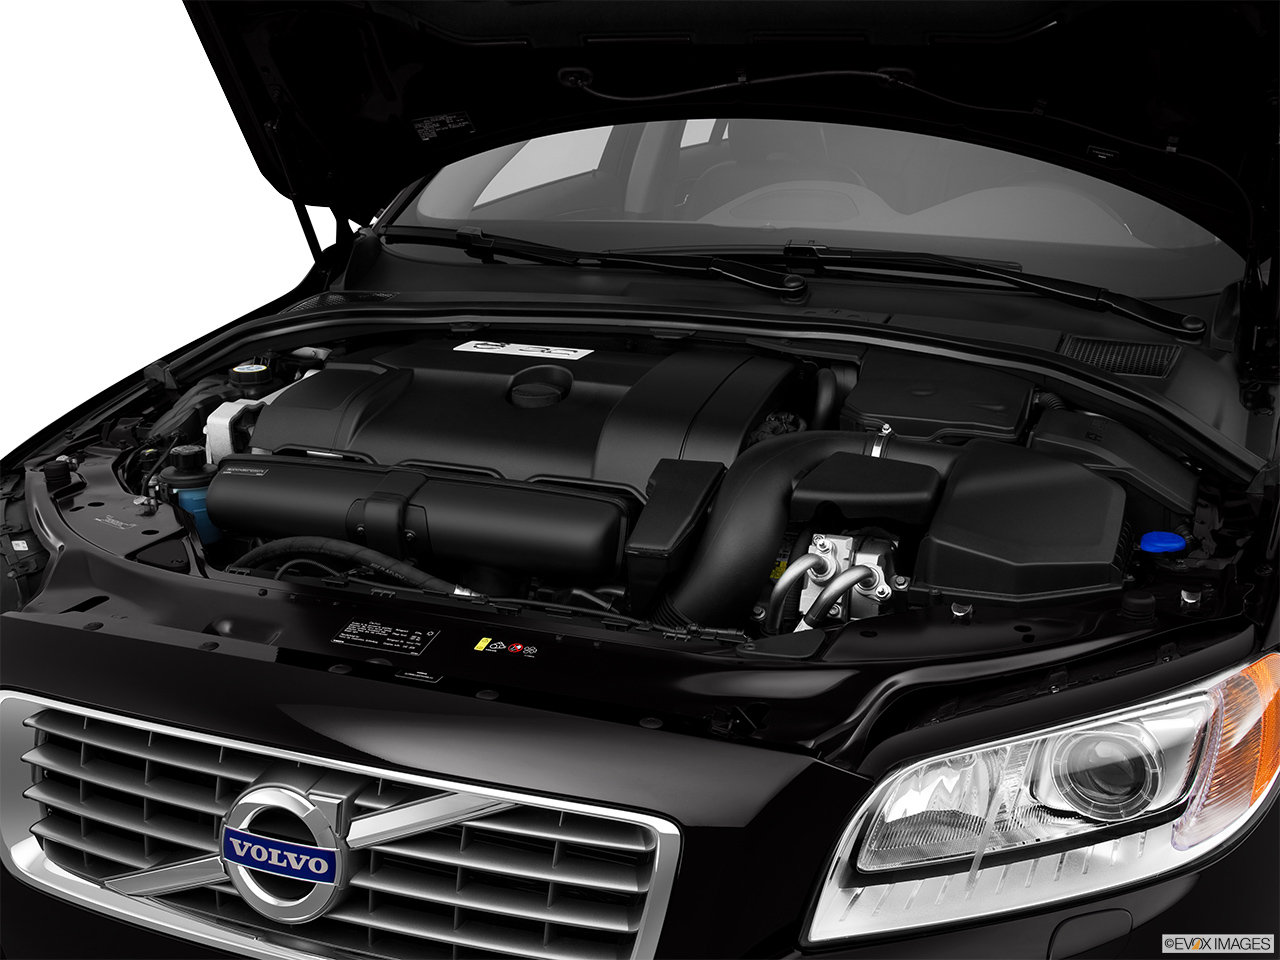 2013 Volvo S80 3.2 Platinum Engine. 